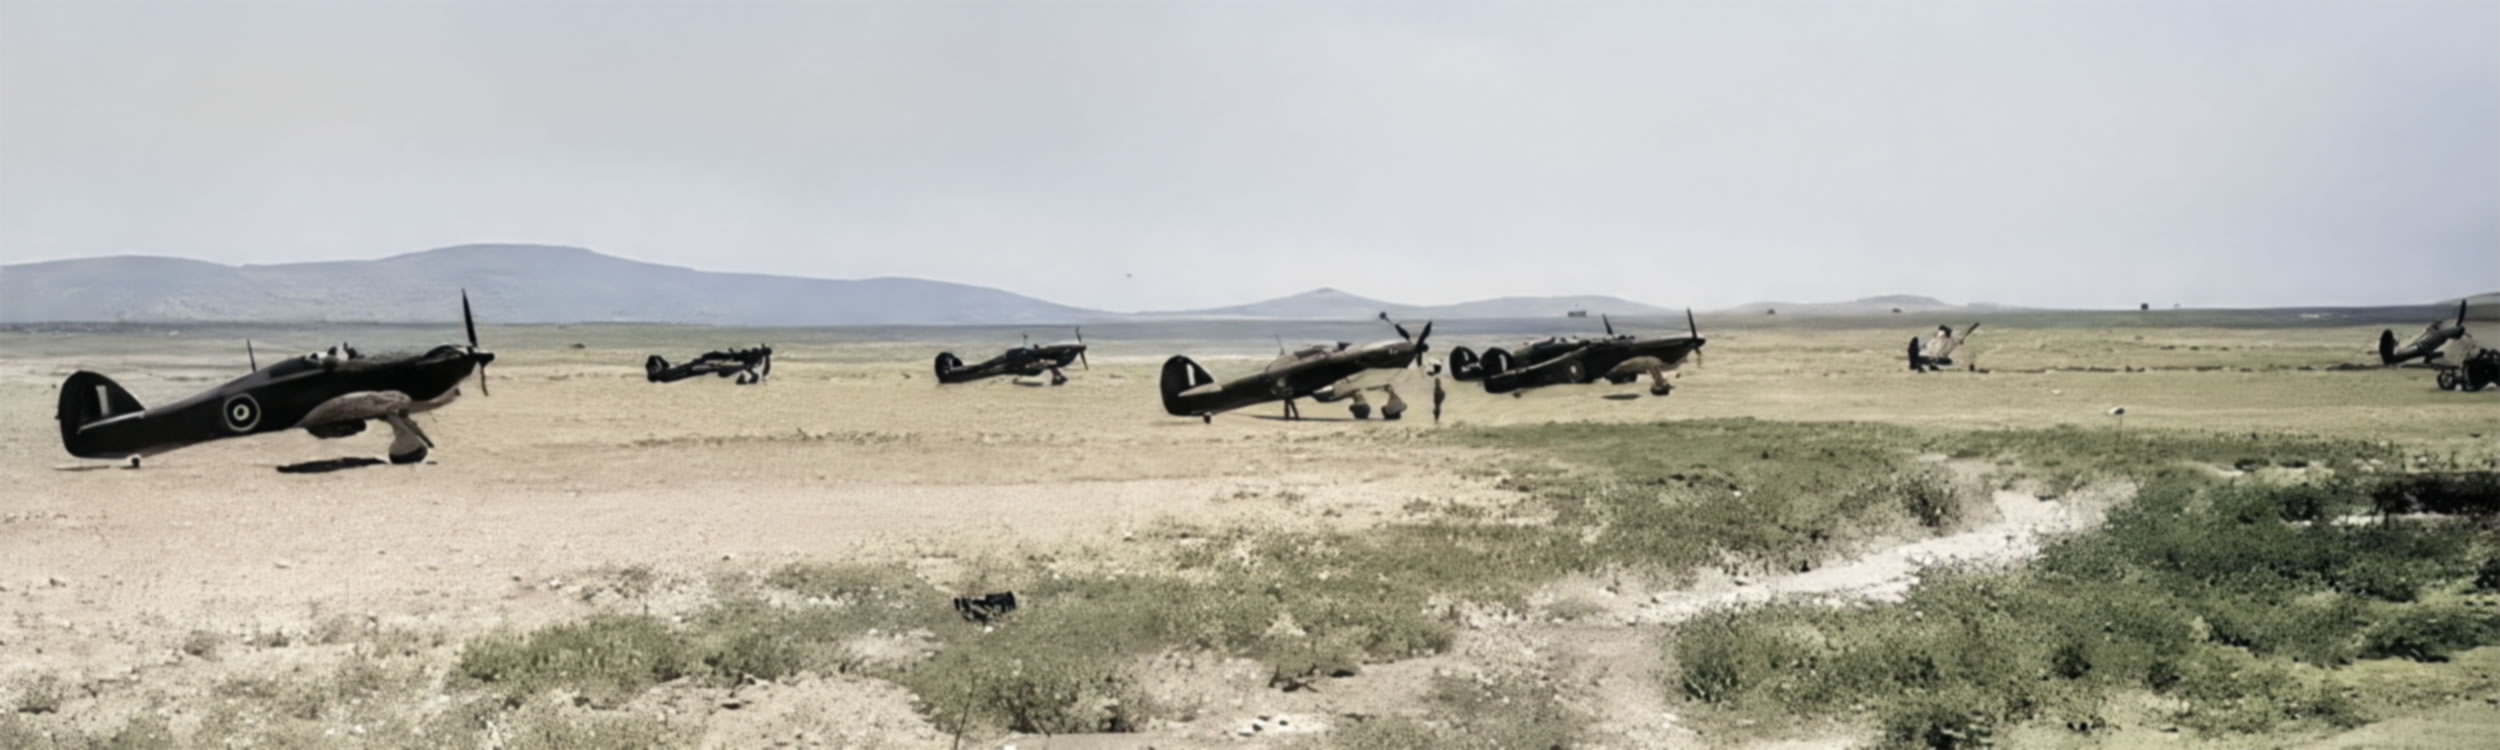 Hurricanes of 80 Squadron in Palestine, June 1941